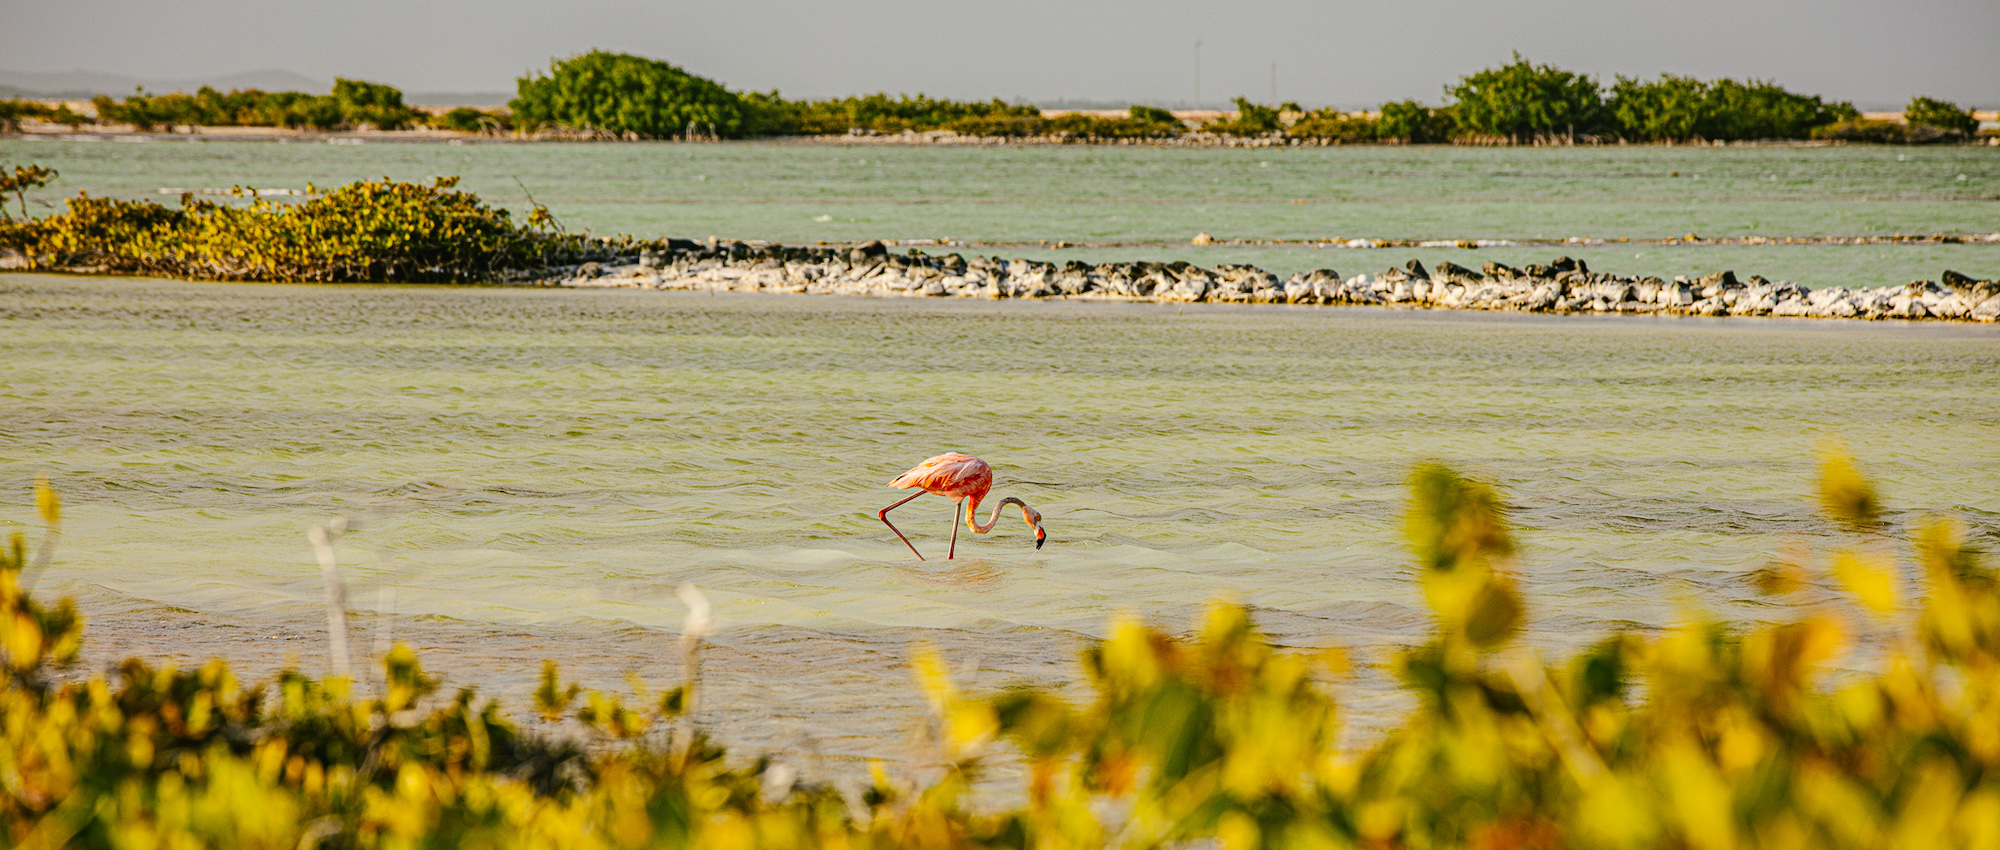 Flamingo standing in beach water